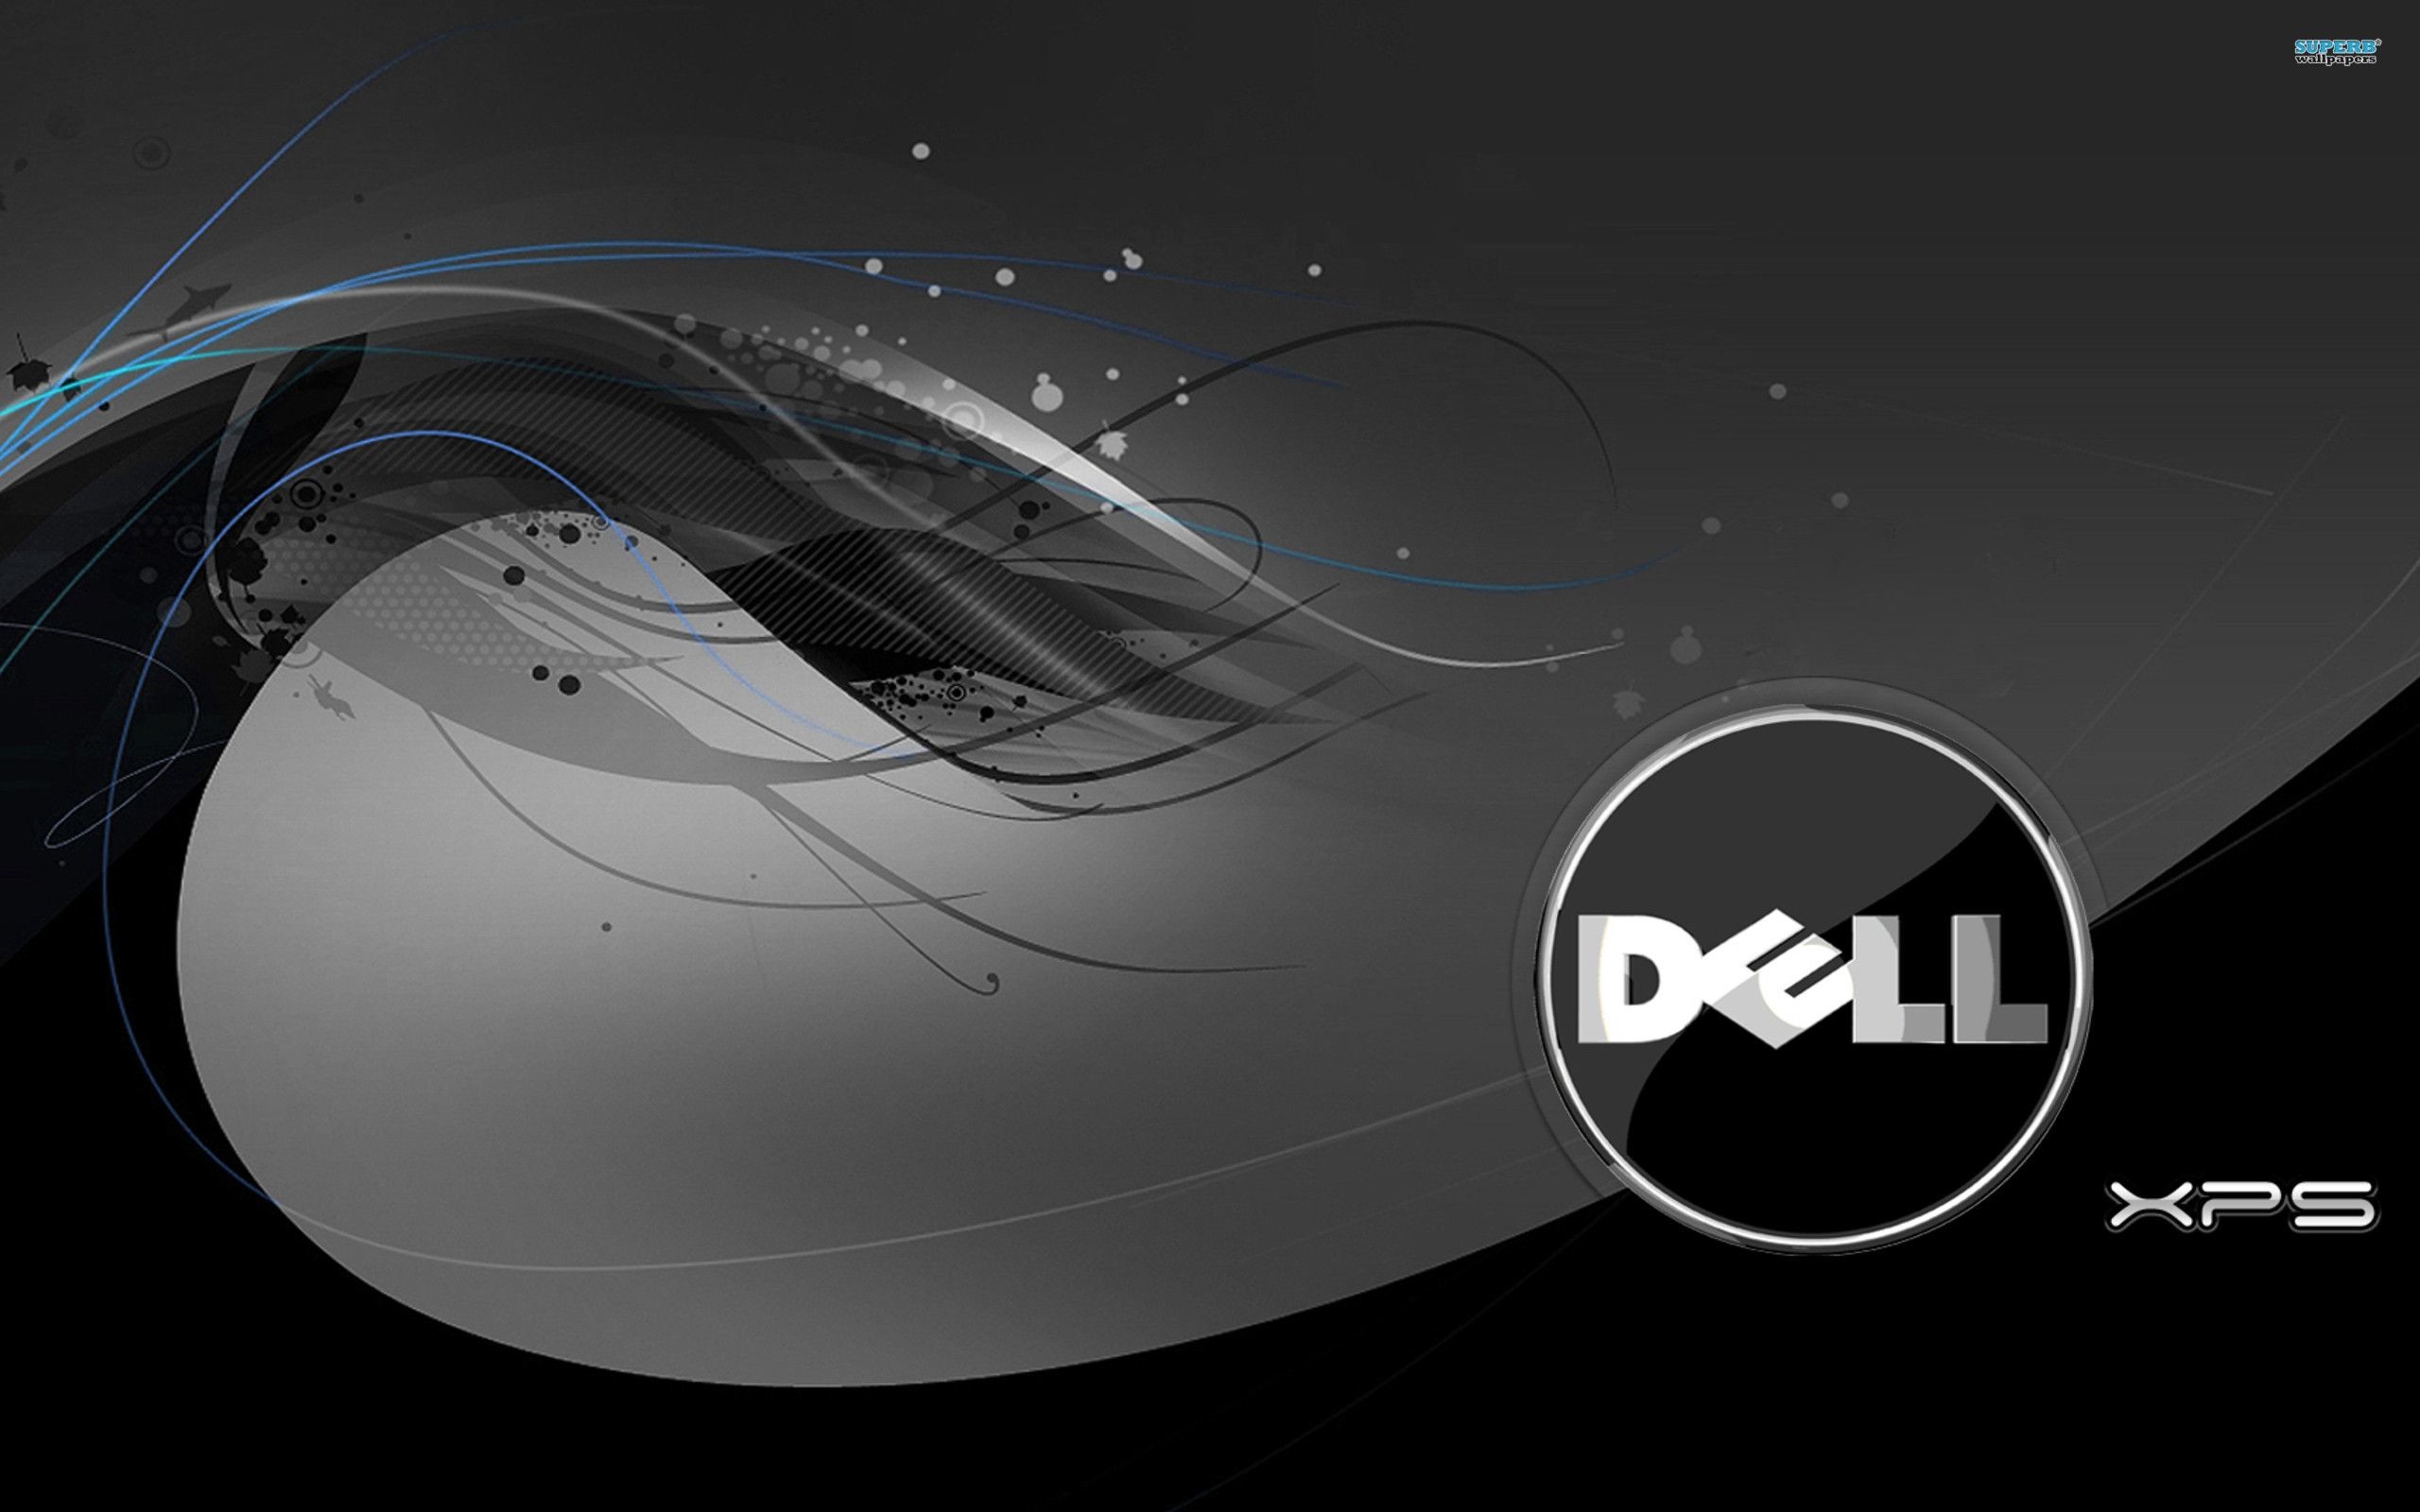 2560x1600 Dell Desktop Backgrounds Wallpaper